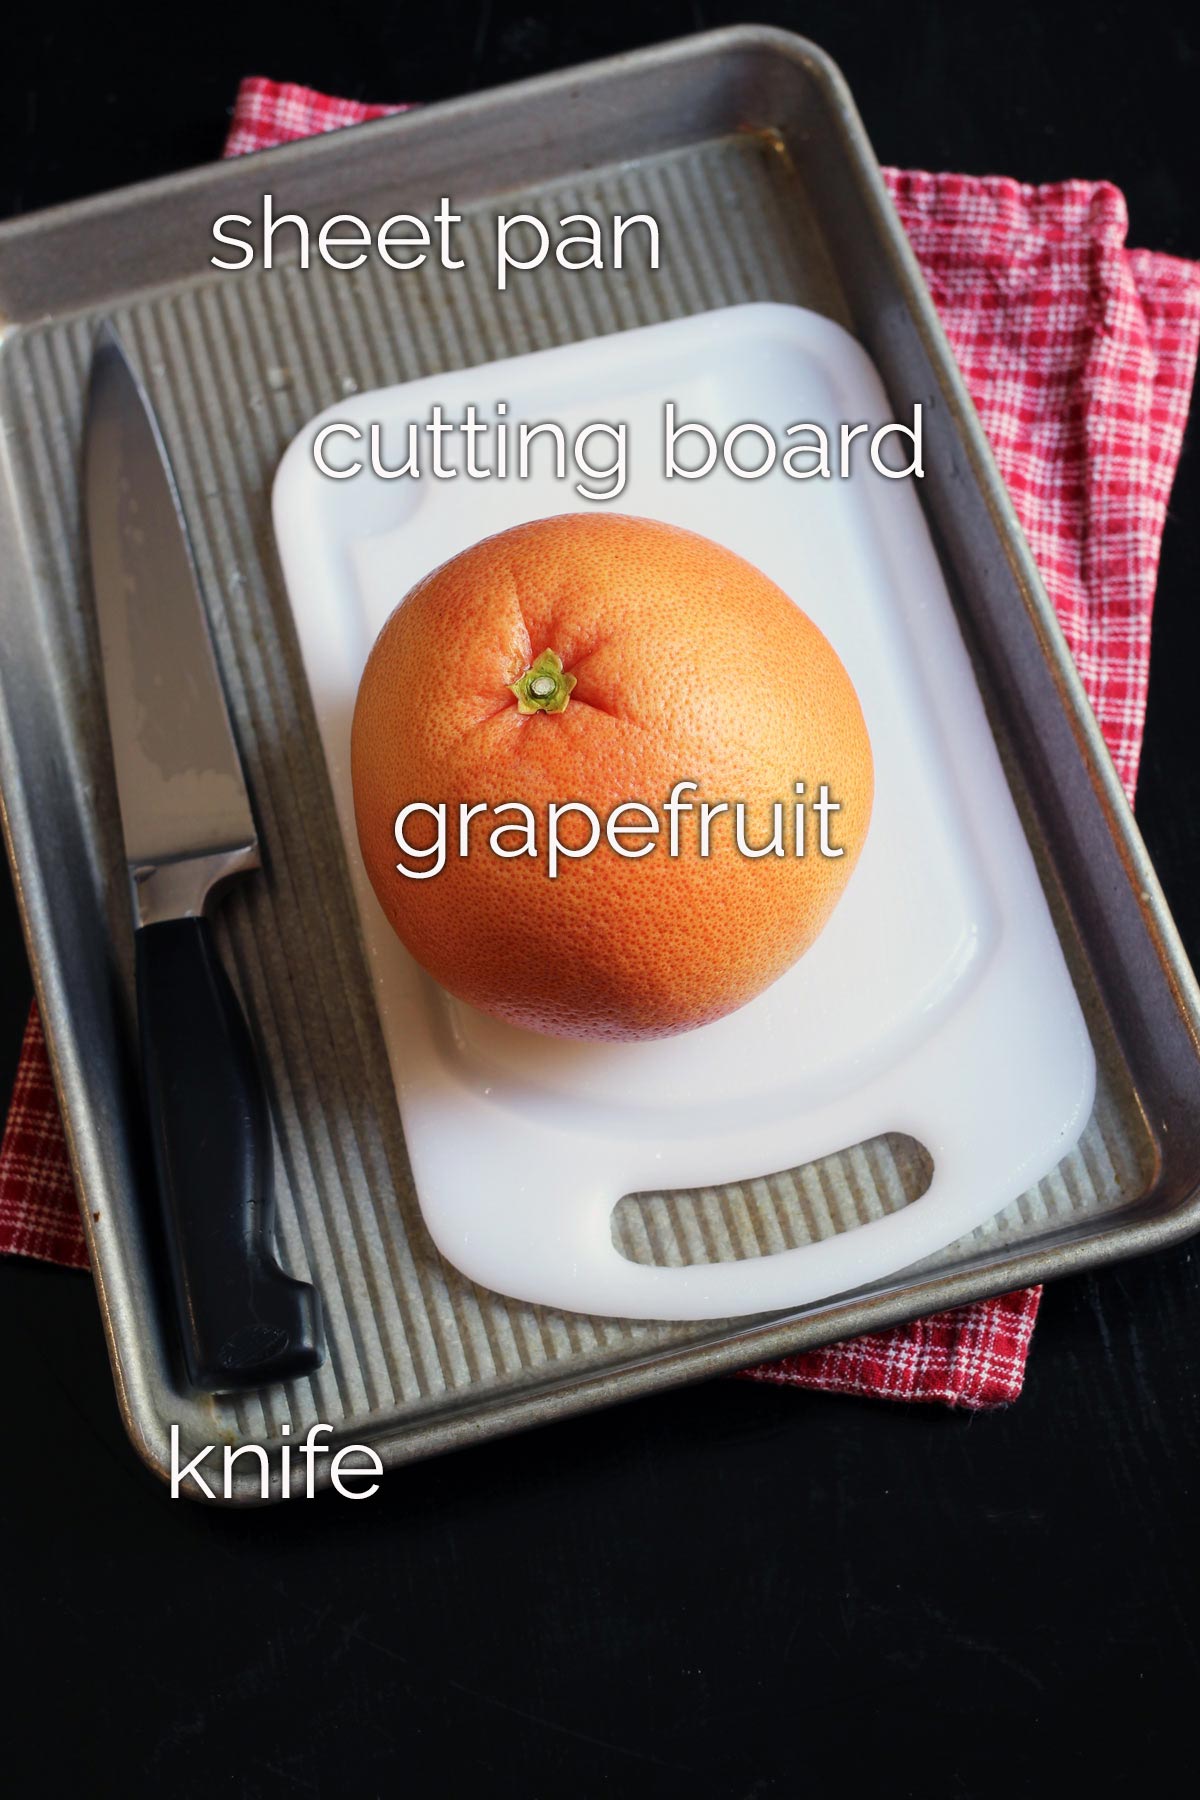 grapefruit on cutting board in sheet pan next to knife.